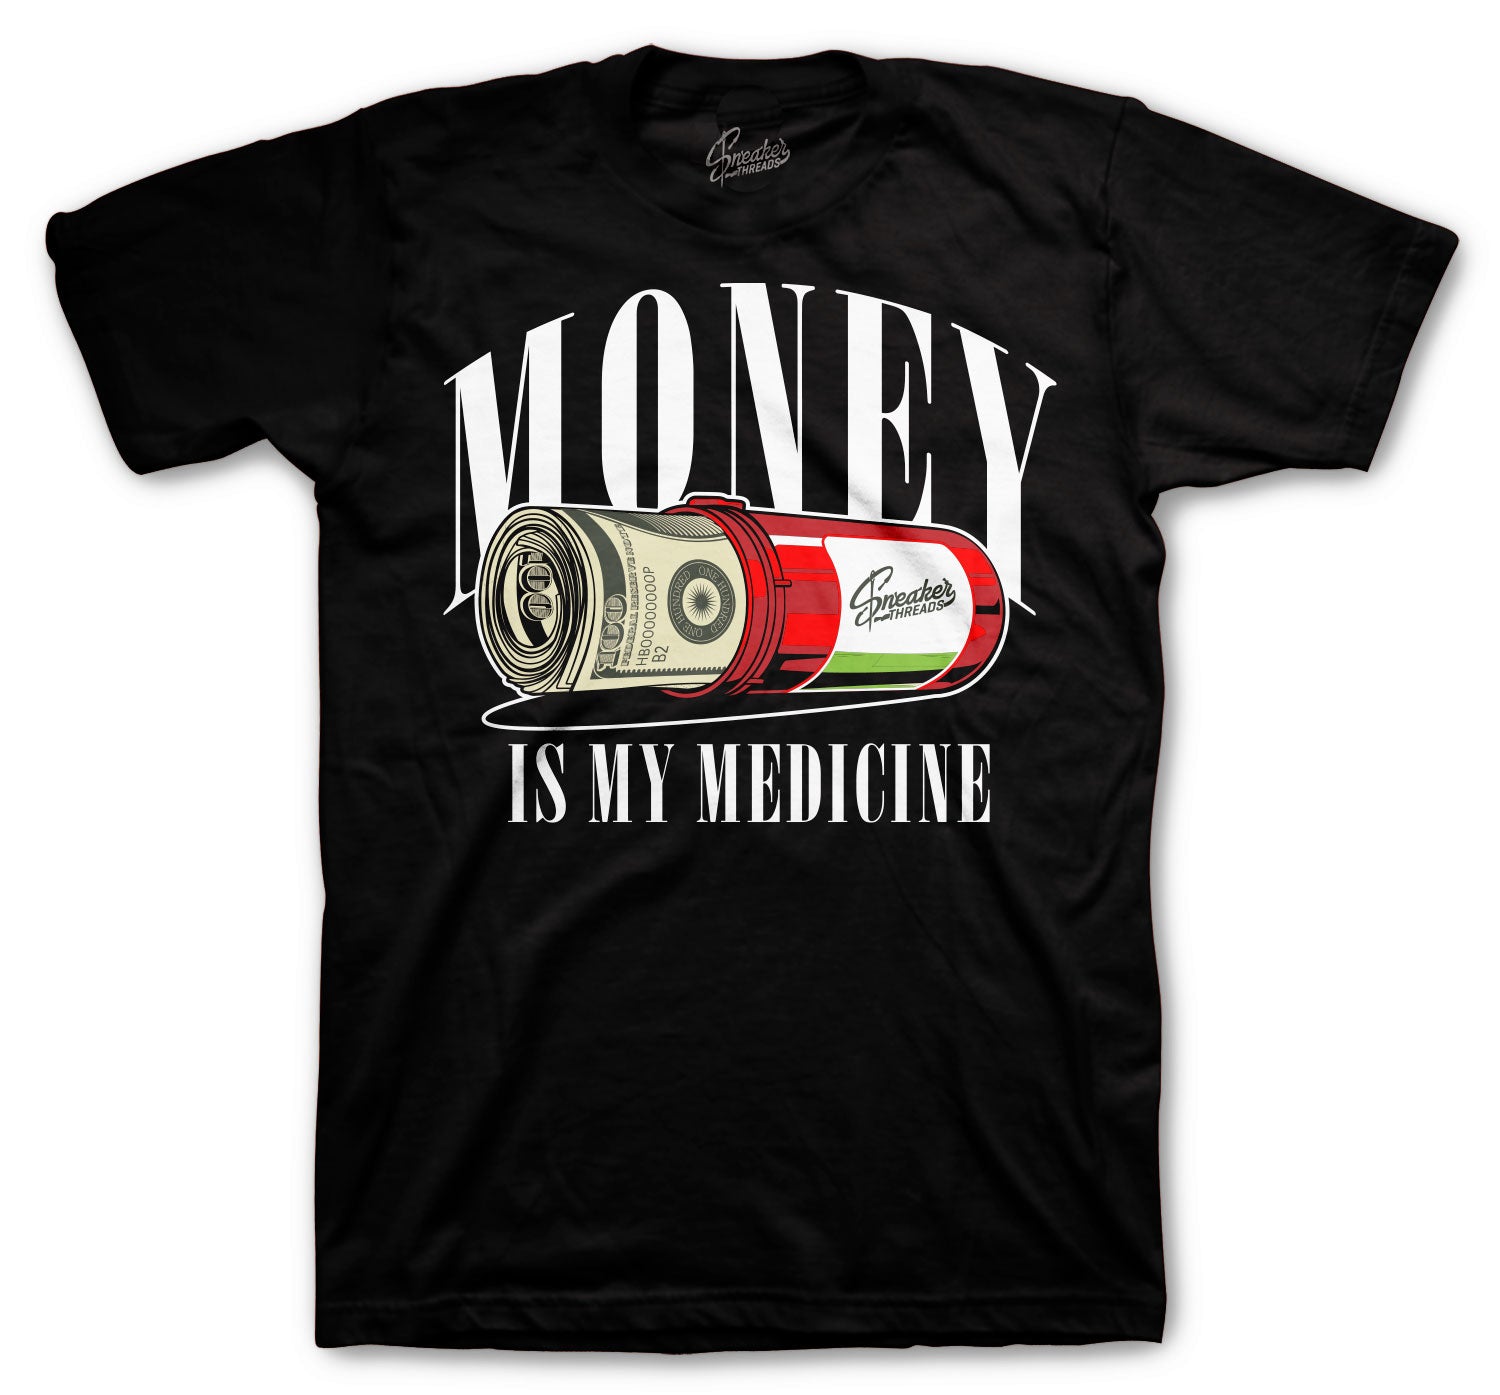 Dunk SB Strawberry Shirt - Money Medicine - Black